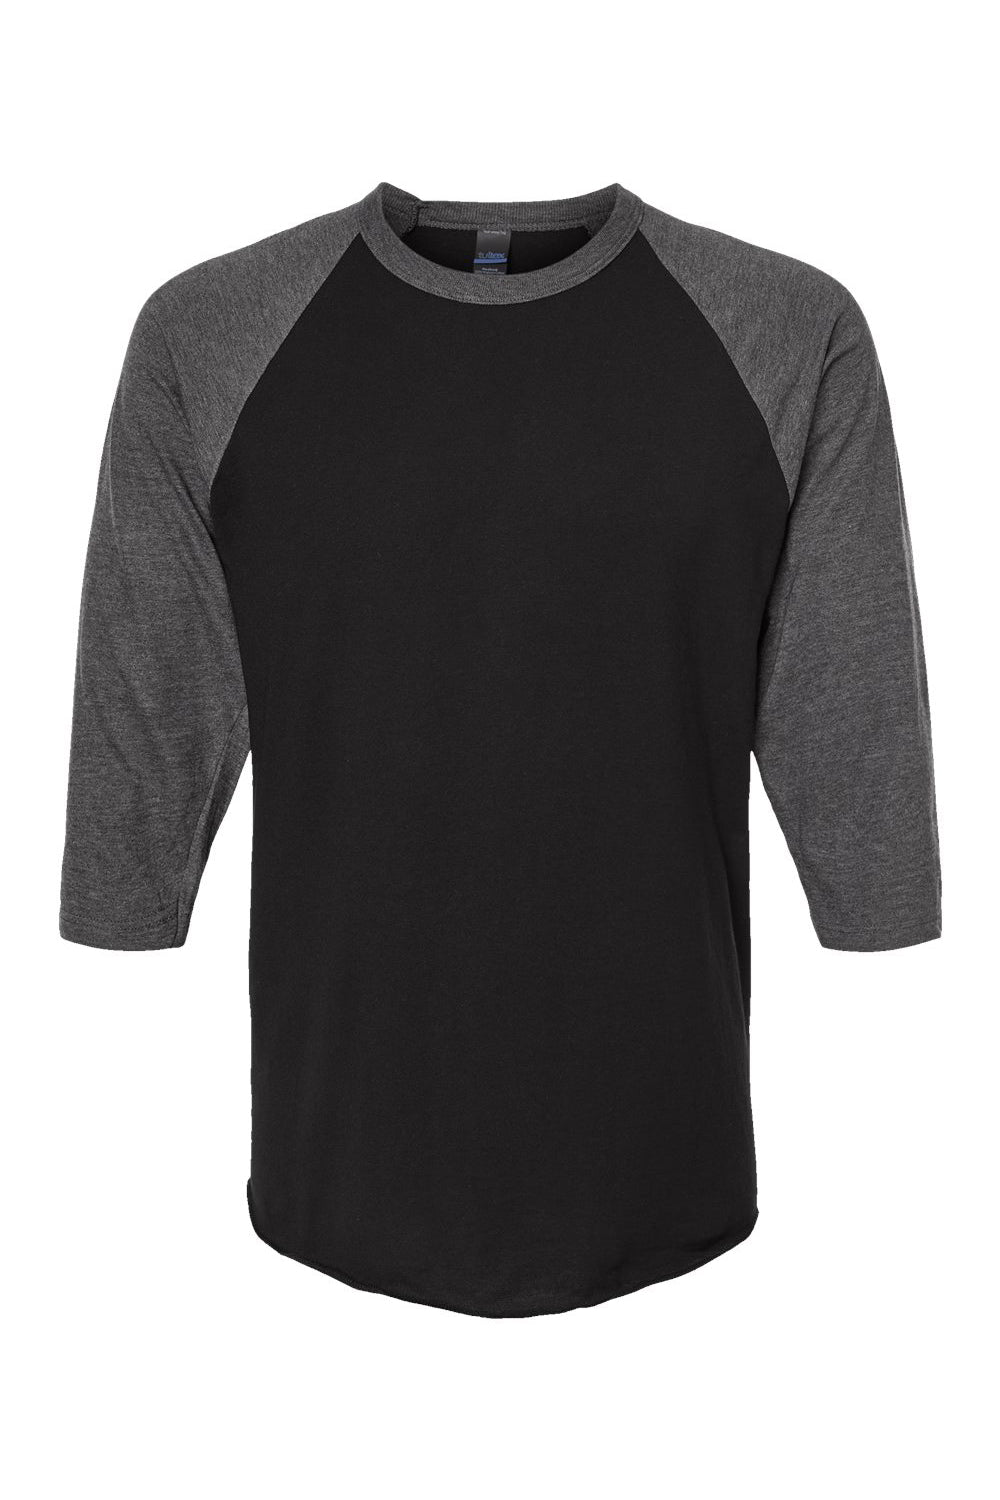 Tultex 245 Mens Fine Jersey Raglan 3/4 Sleeve Crewneck T-Shirt Black/Heather Charcoal Grey Flat Front